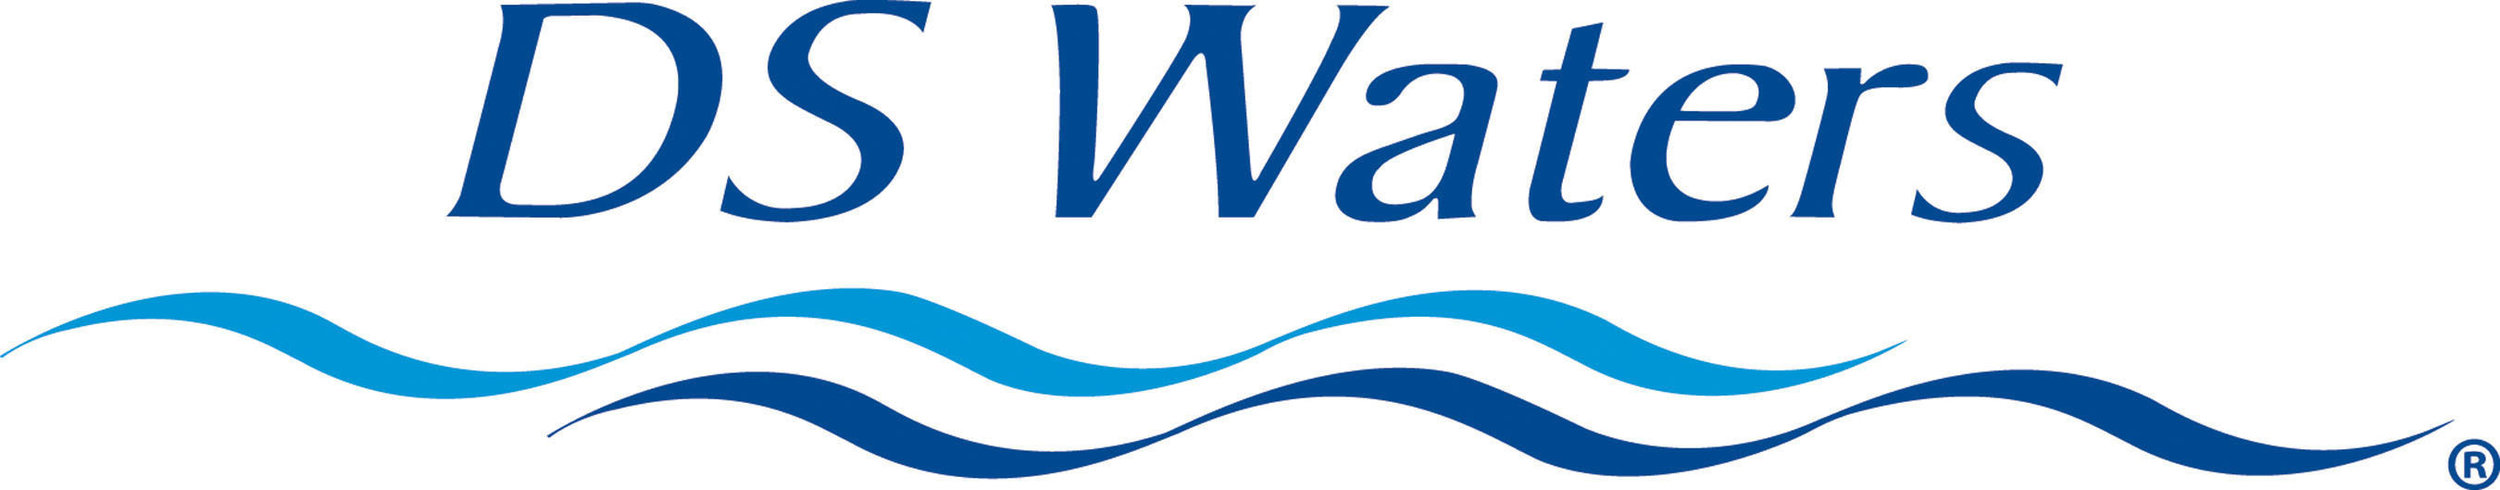 DS Waters Logo.jpg